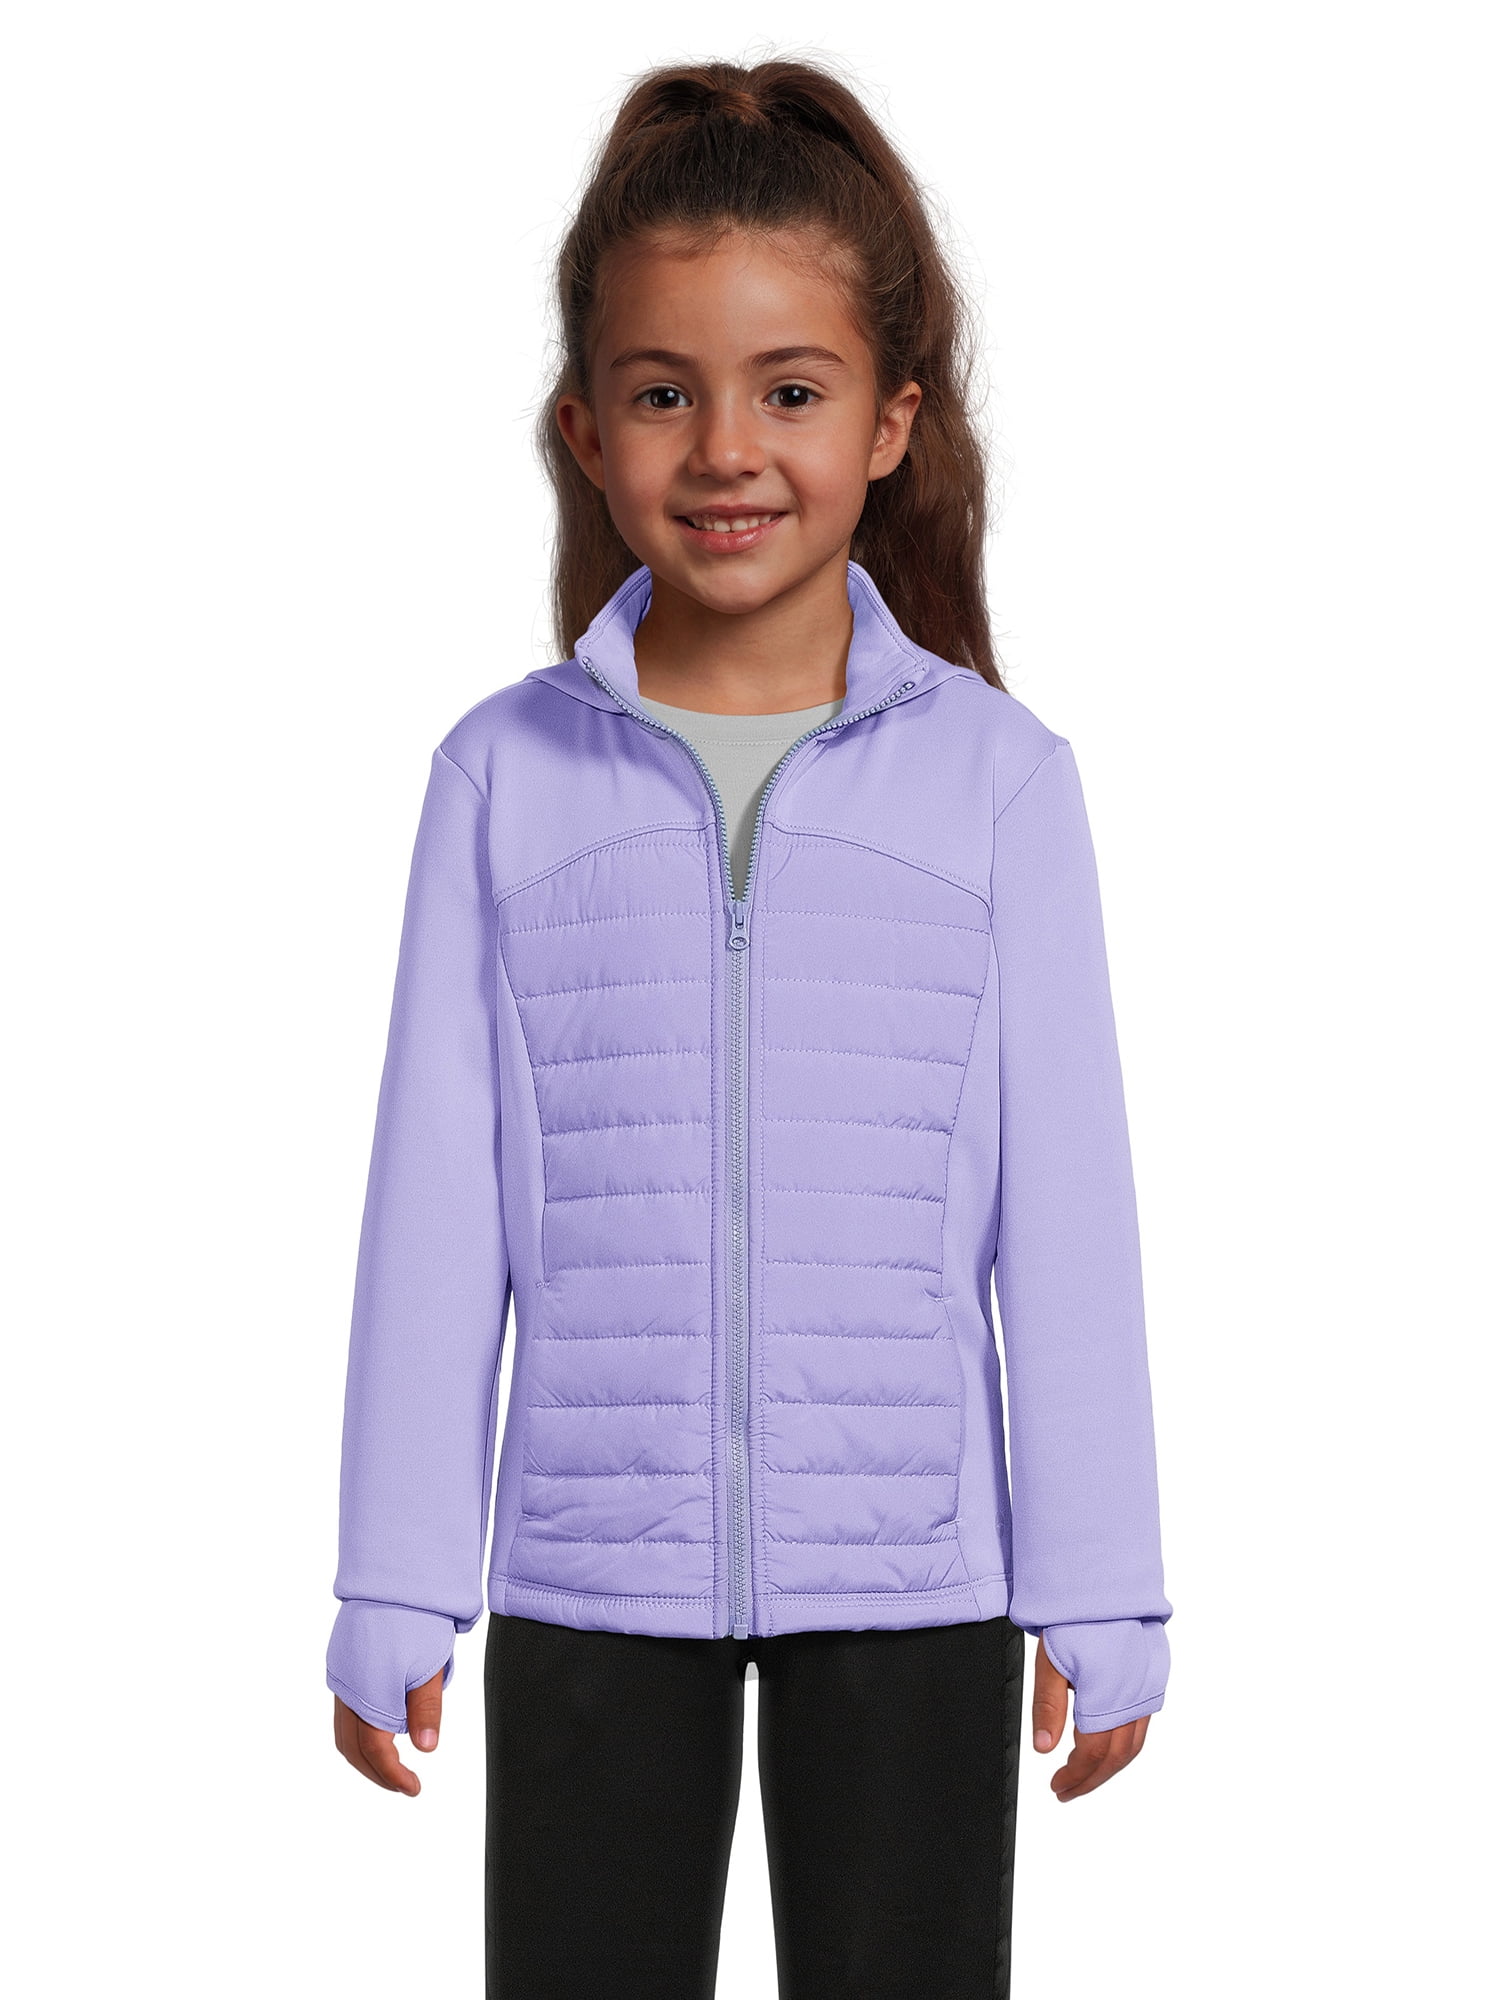 Avia Girls Quilted Jacket, Sizes 4-18 & Plus - Walmart.com